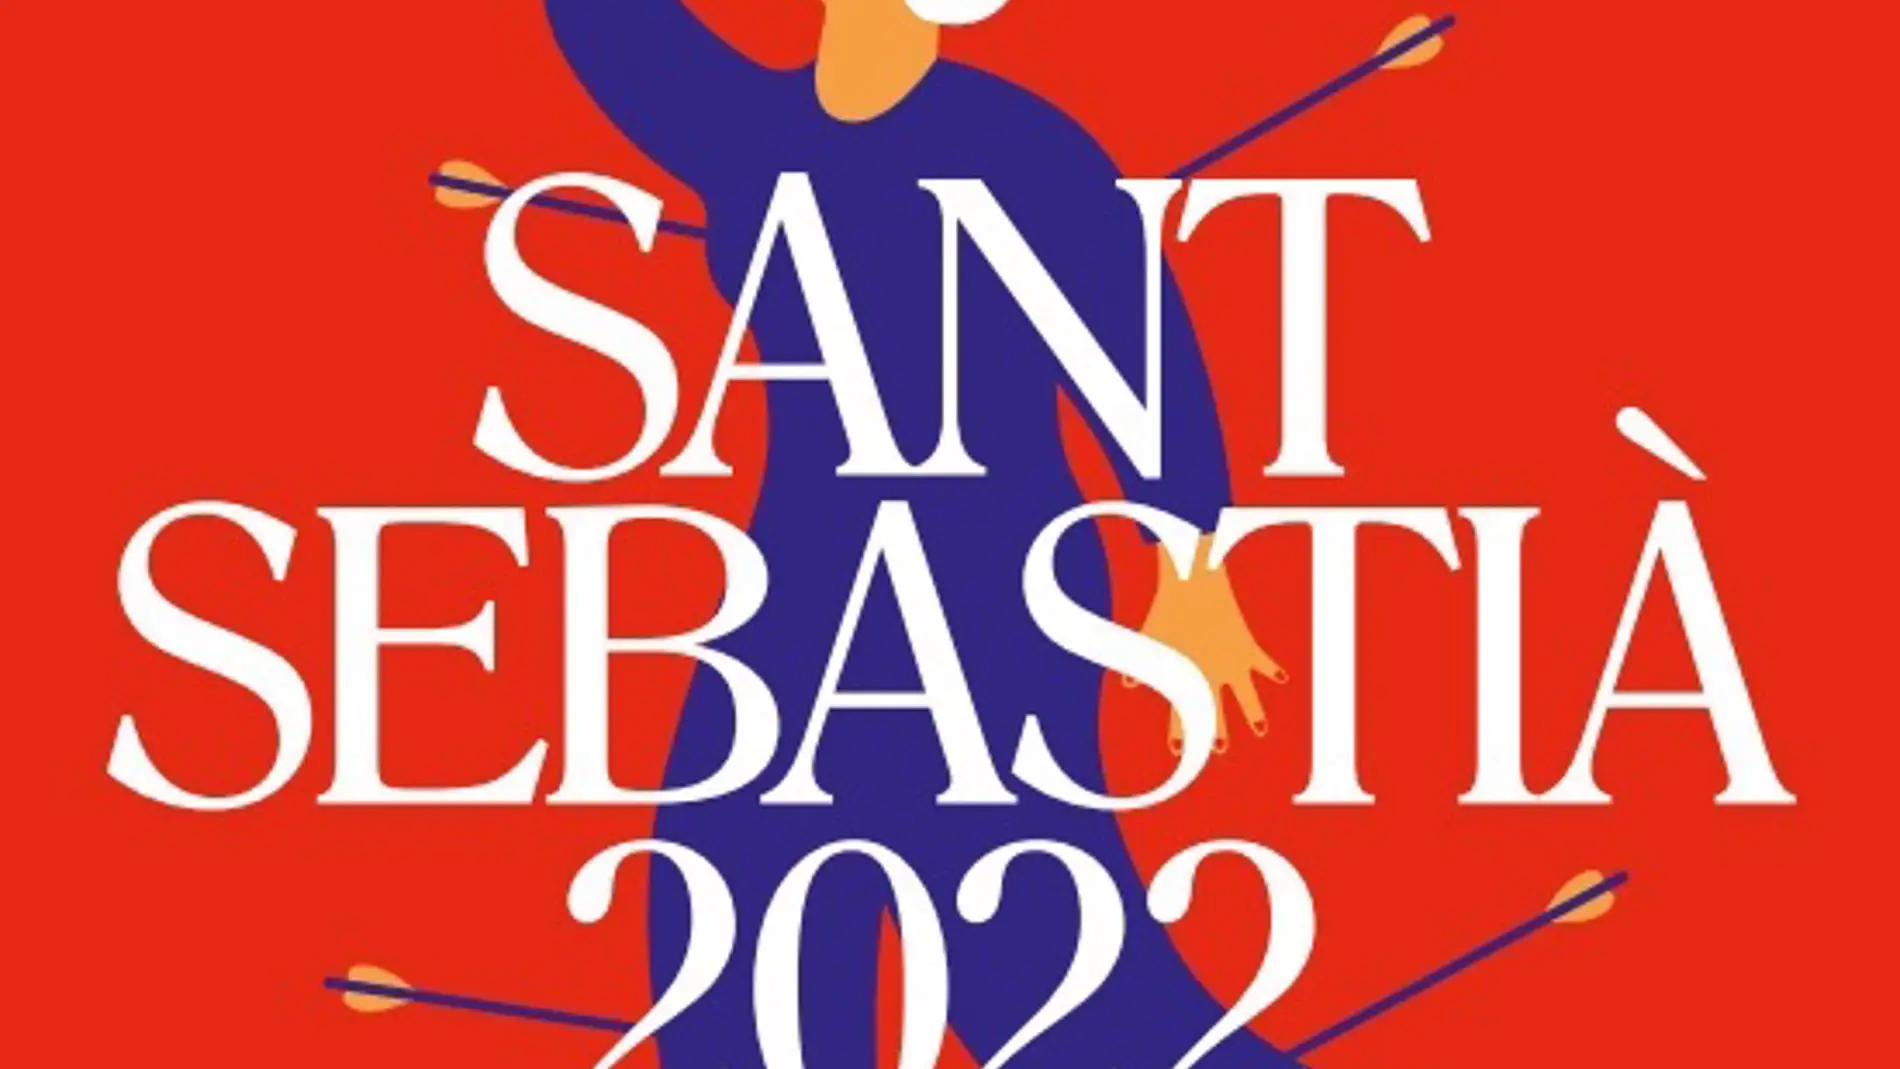 Cartel de las fiestas de Sant Sebastià de 2022.